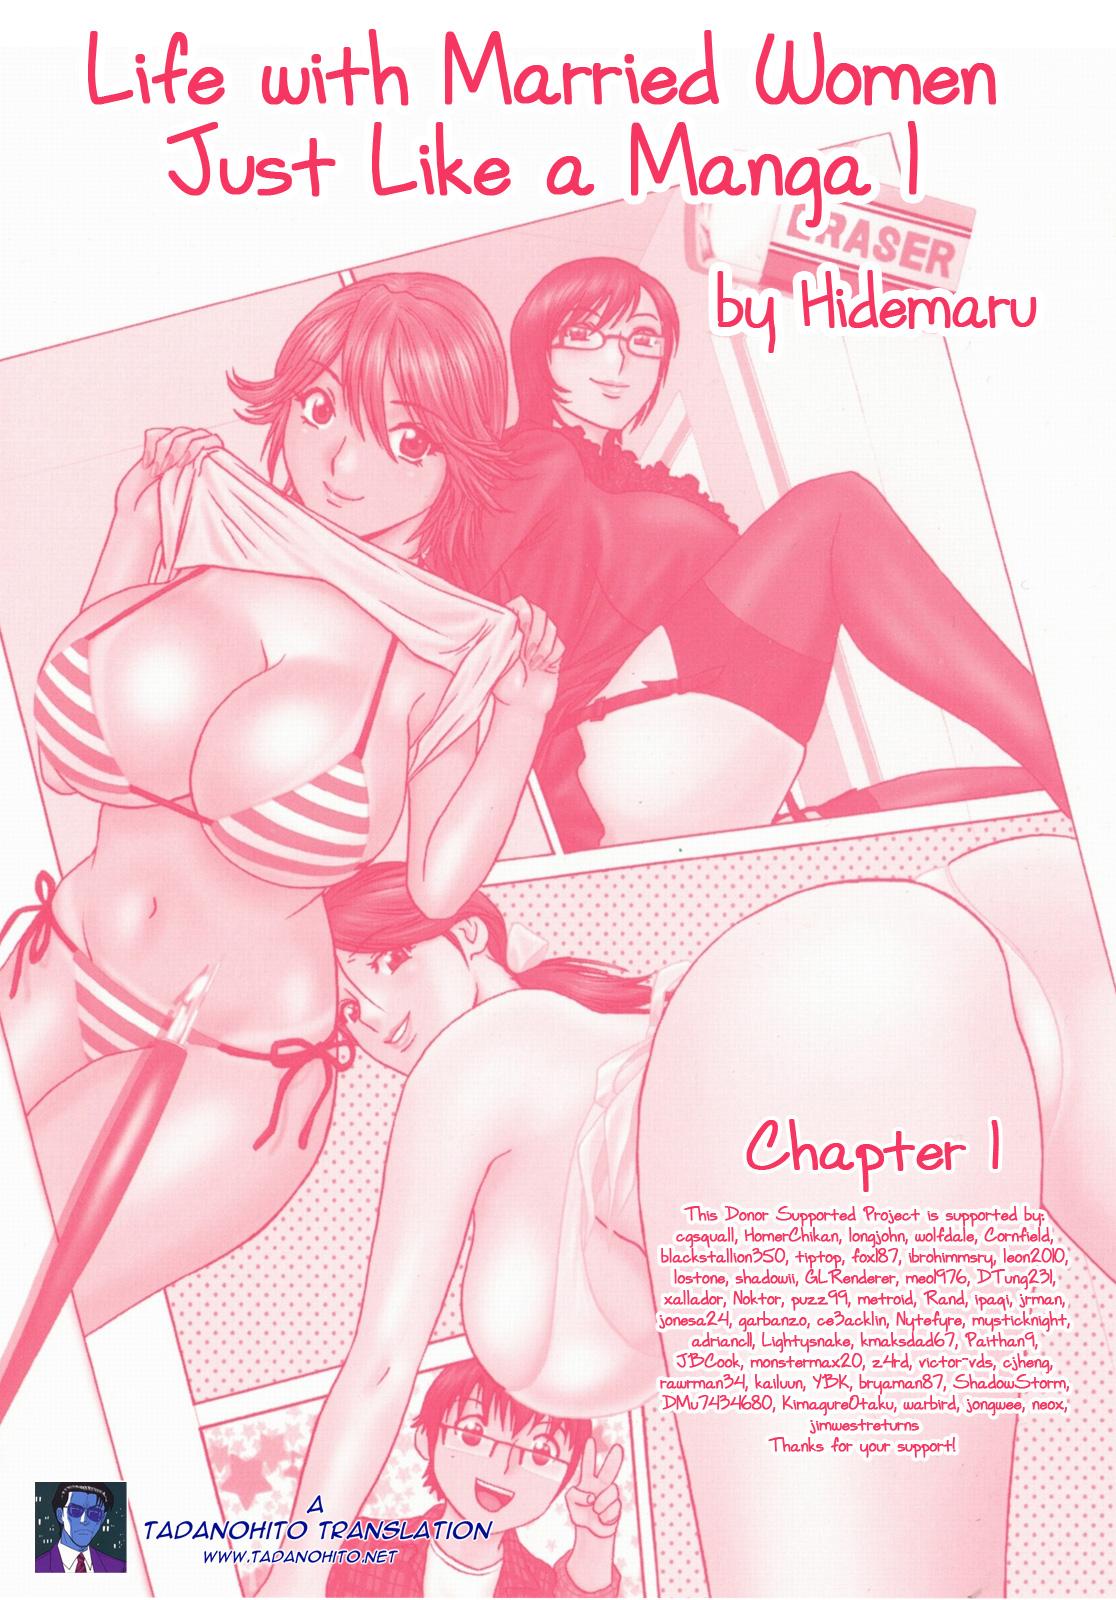 [Hidemaru] Life with Married Women Just Like a Manga 1 - Ch. 1-7 [English] {Tadanohito} 25